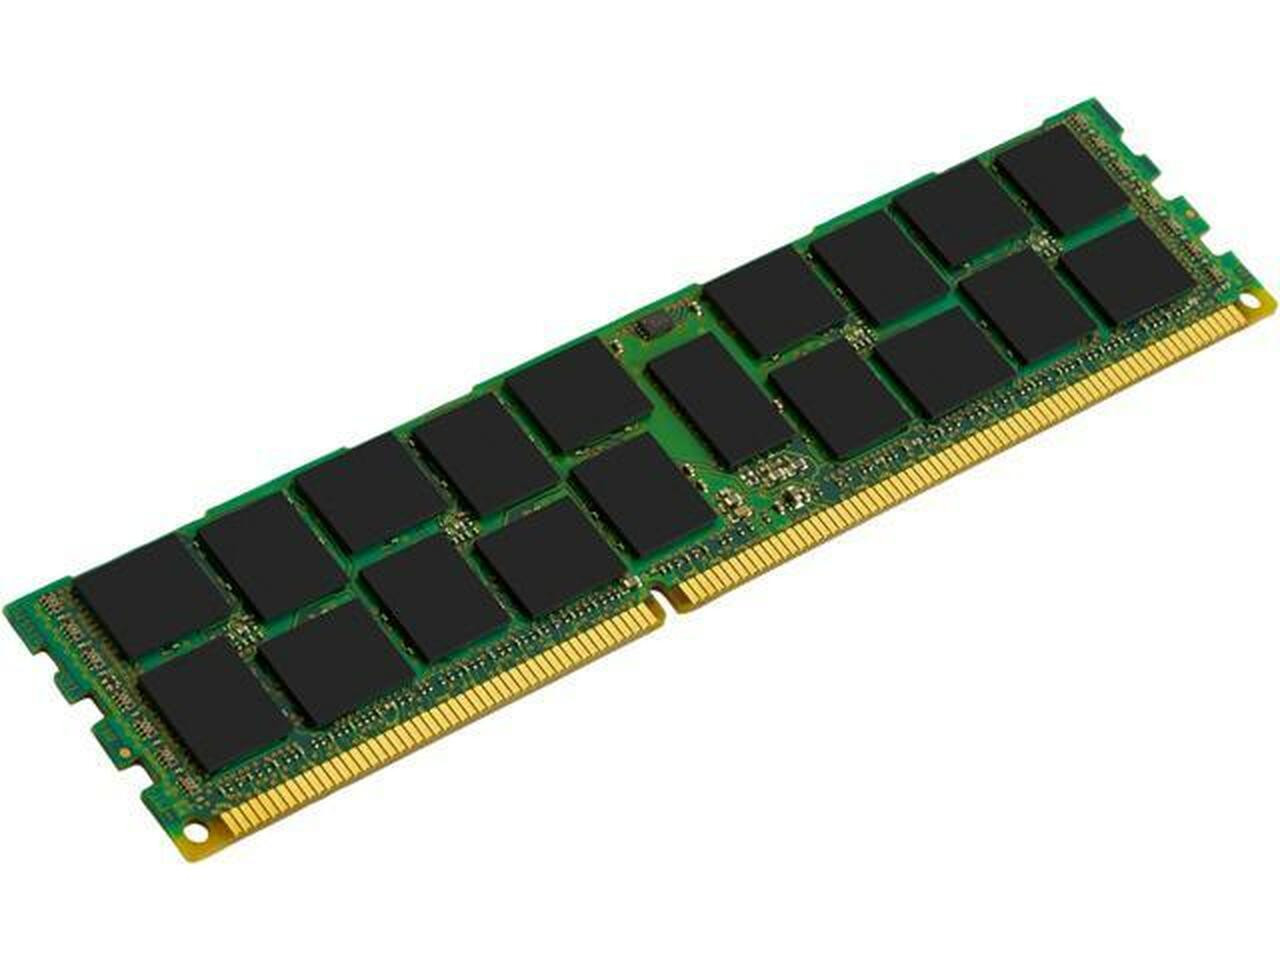 Netpatibles 16GB DDR4 SDRAM Memory Module - 838081-K21-NPM